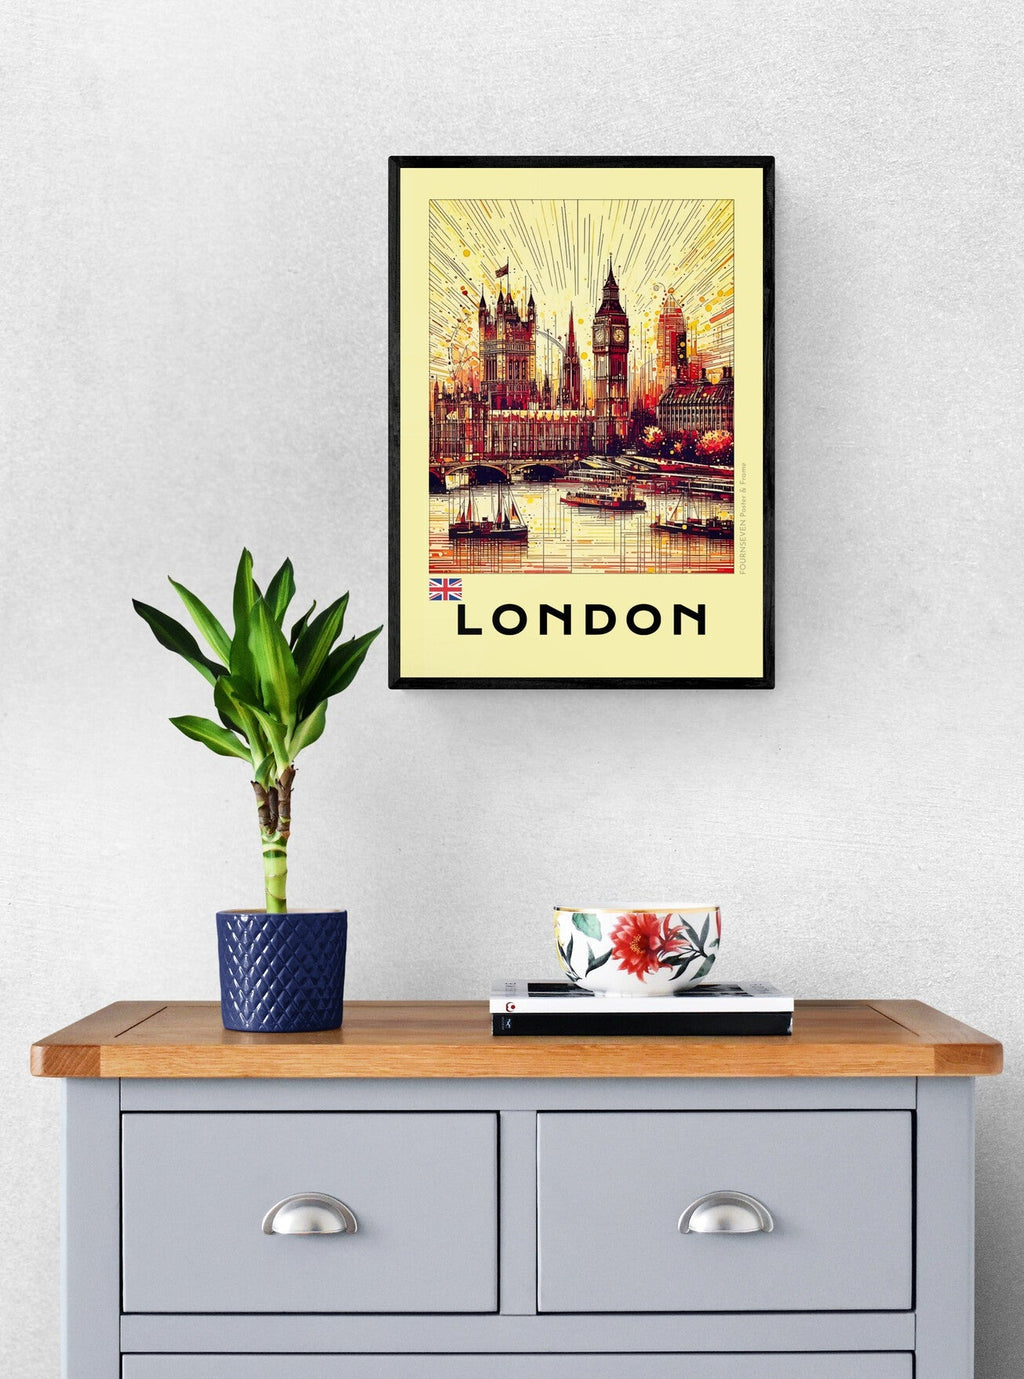 LONDON abstract digital artwork poster.